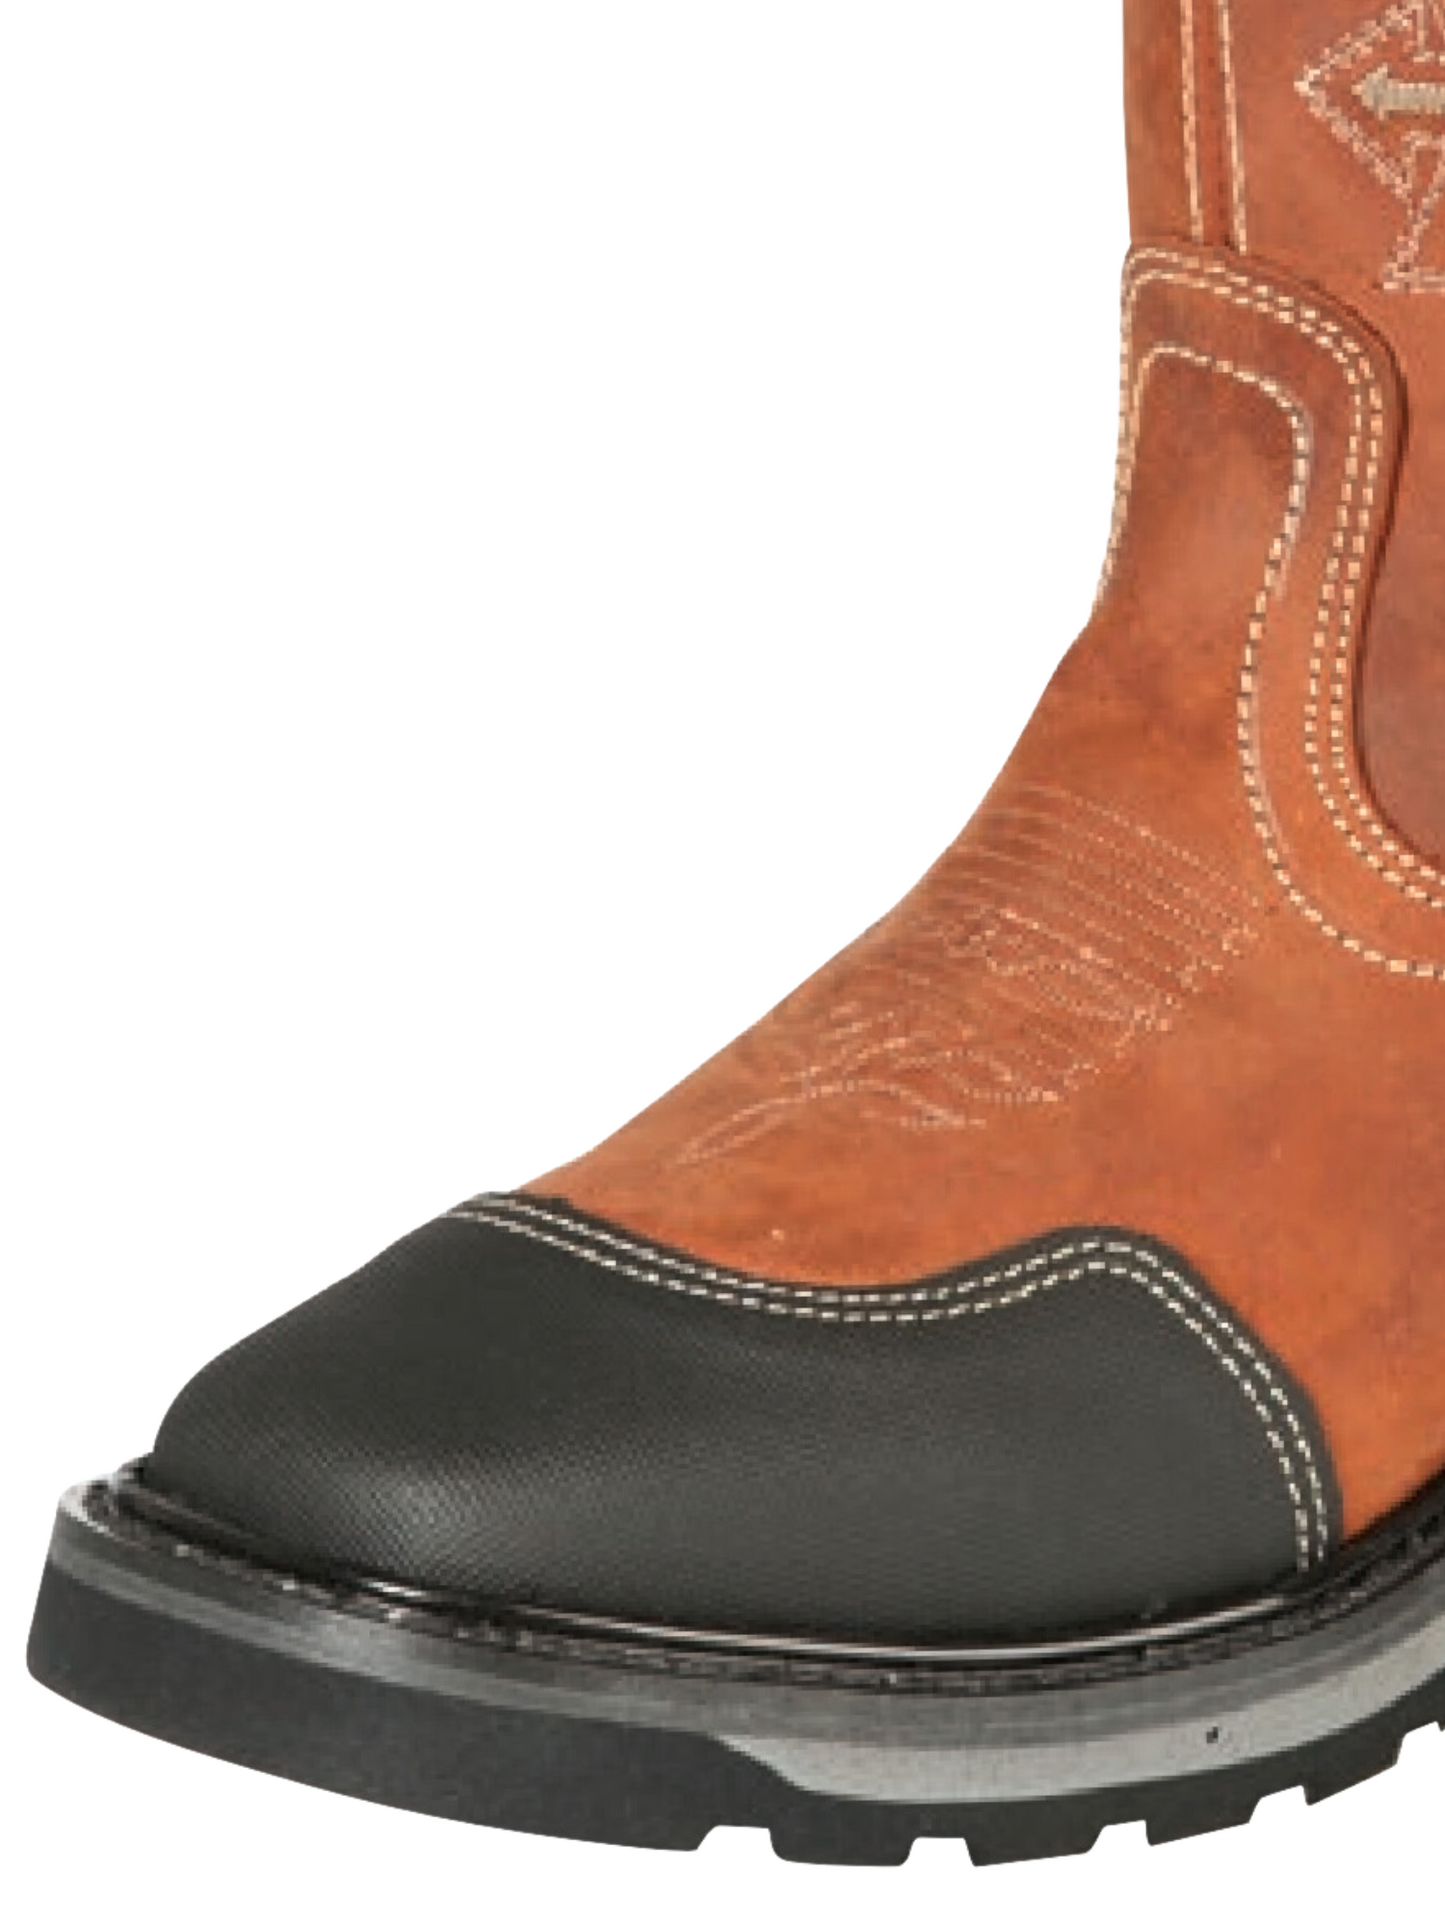 Men's Genuine Leather Soft Toe Pull-On Tube Rodeo Work Boots 'El General' - ID: 51281 Work Boots El General